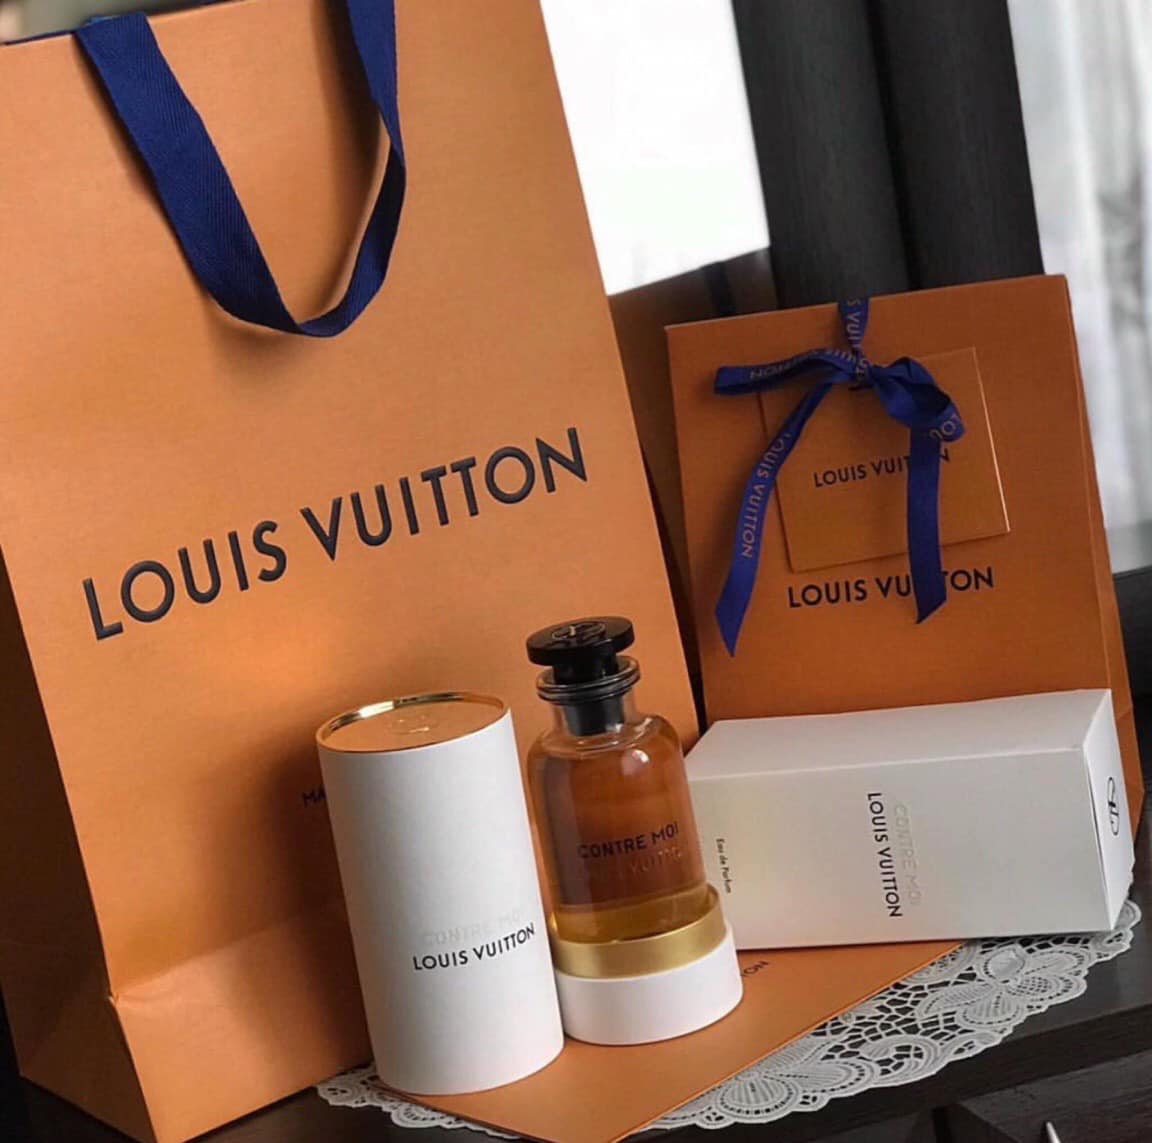 Nước hoa Louis Vuitton Contre Moi được giới thiệu năm 2016 do Jacques Cavallier sáng tạo